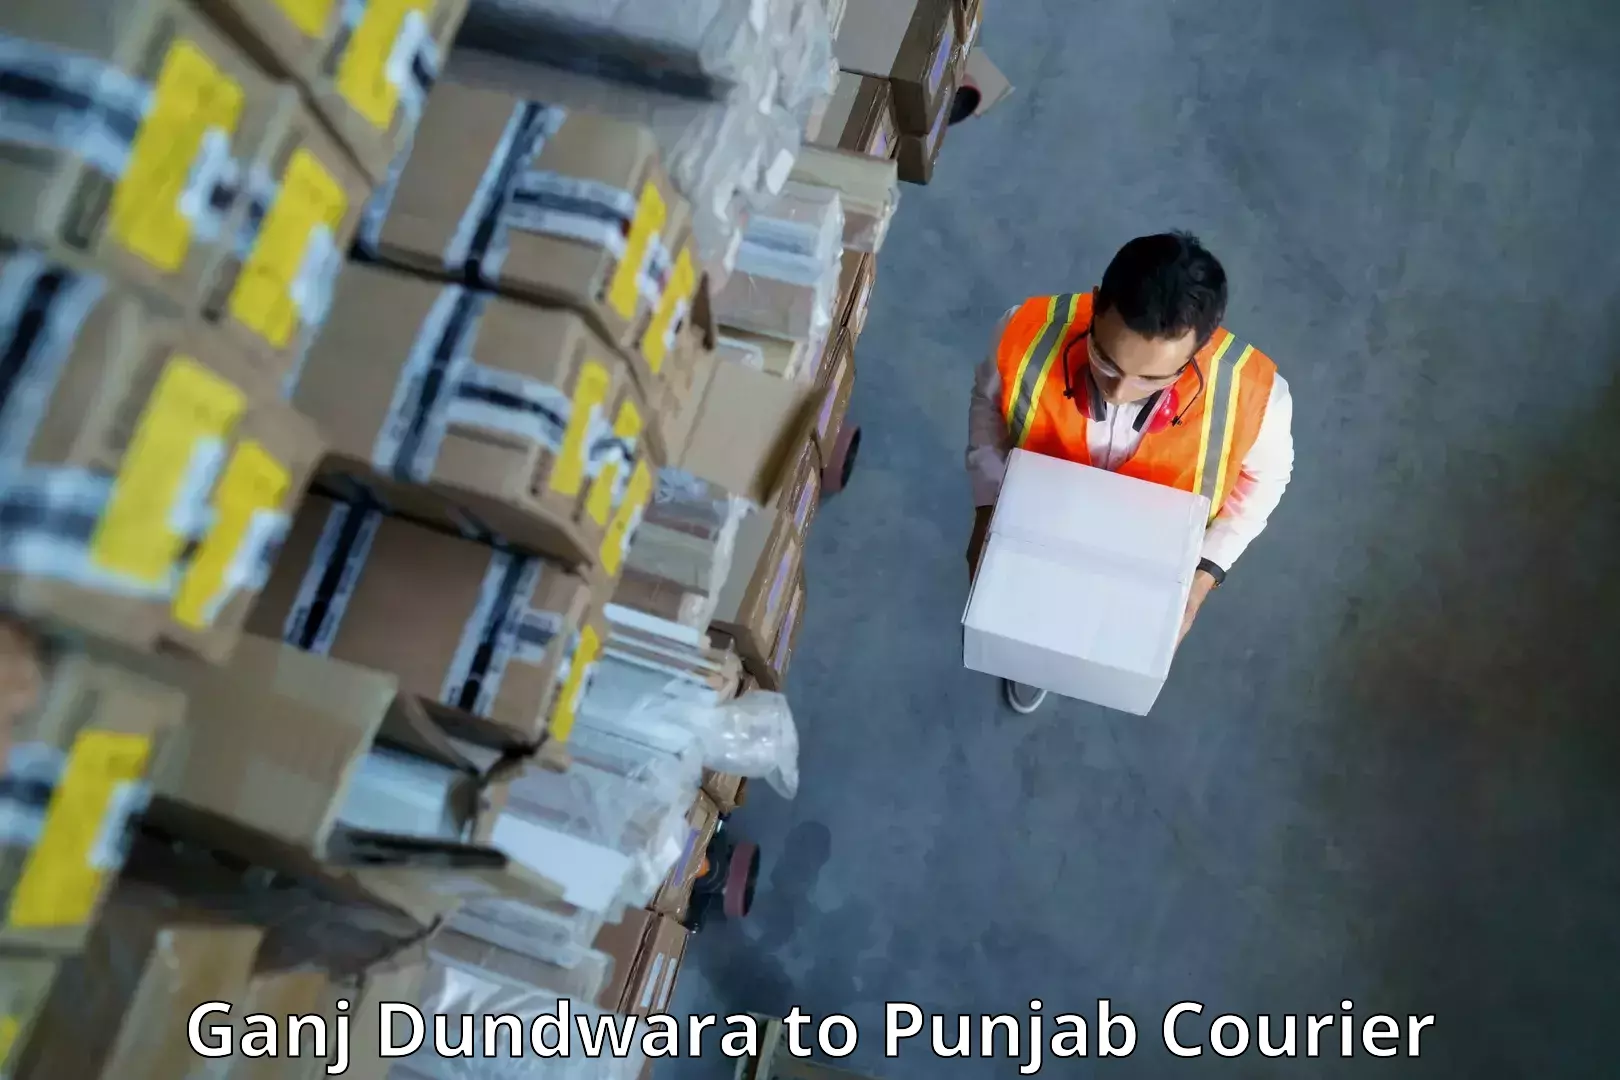 Overnight delivery services Ganj Dundwara to Moga